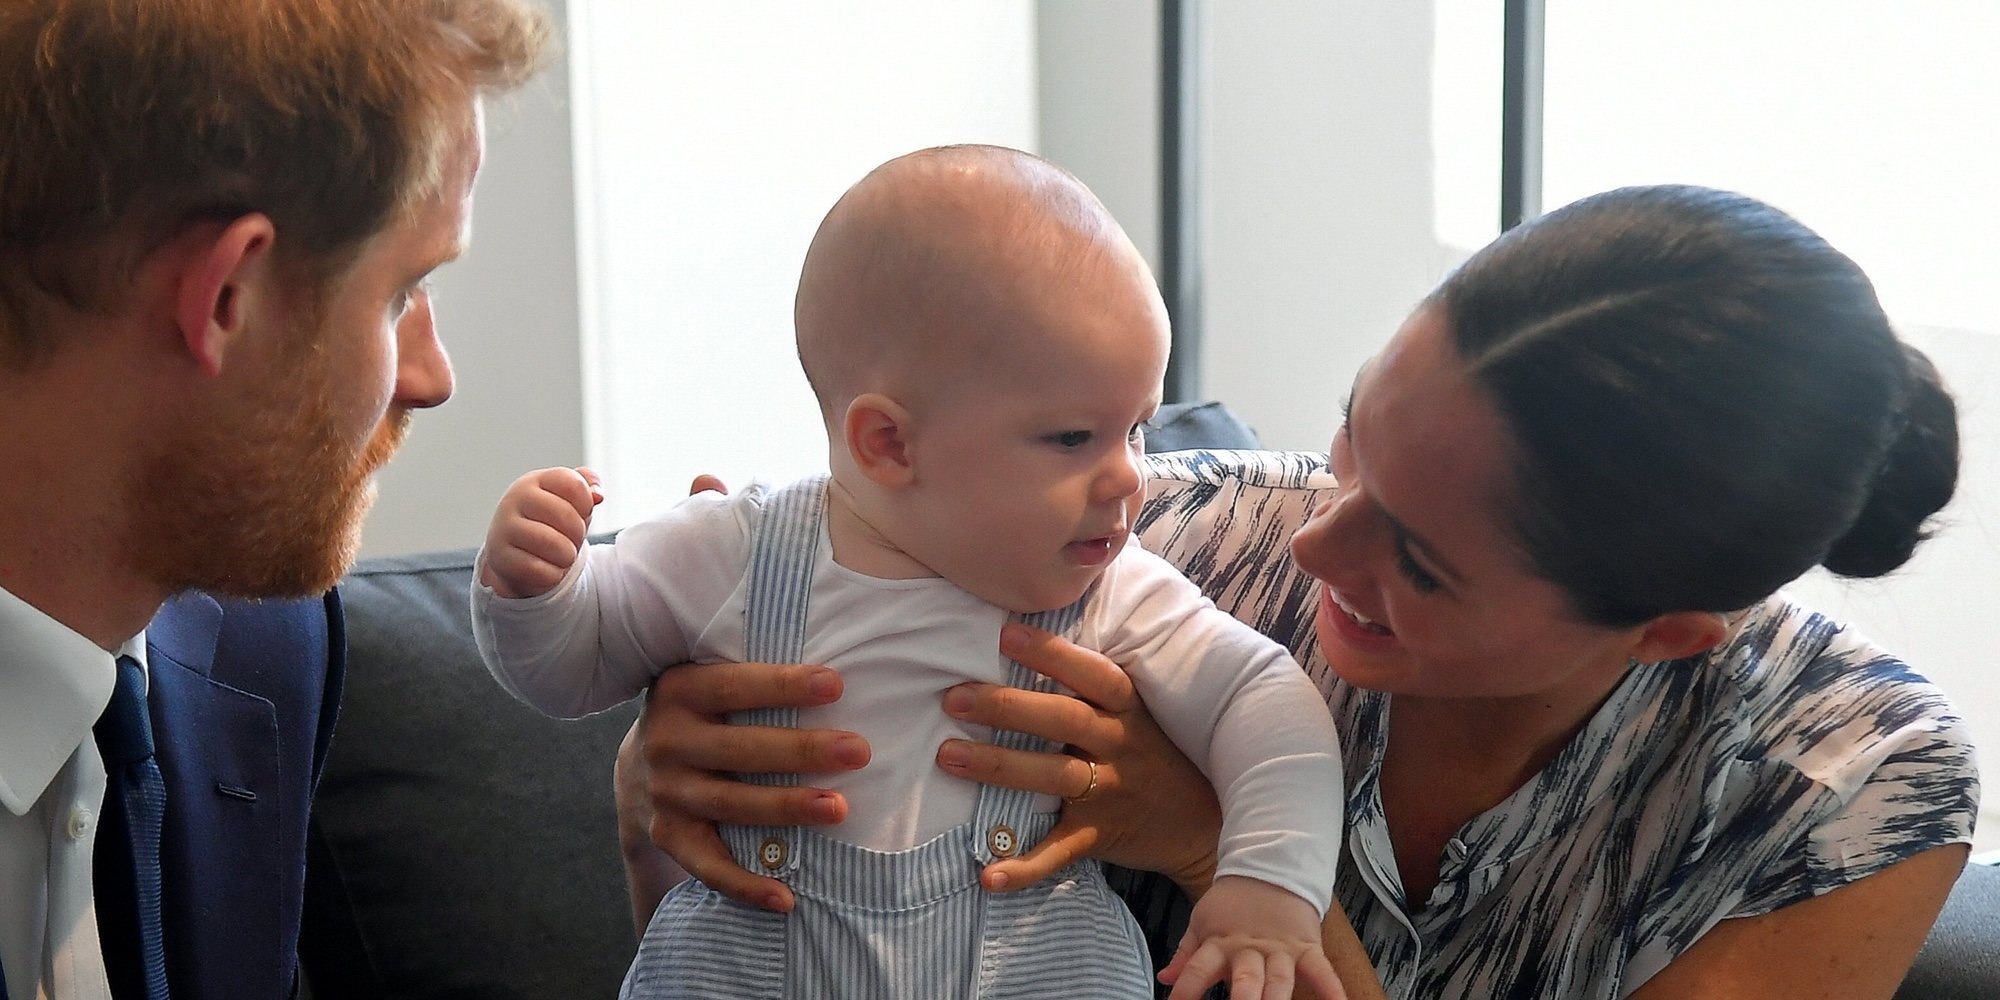 Meghan Markle revela que su hijo Archie está comenzado a caminar con 10 meses